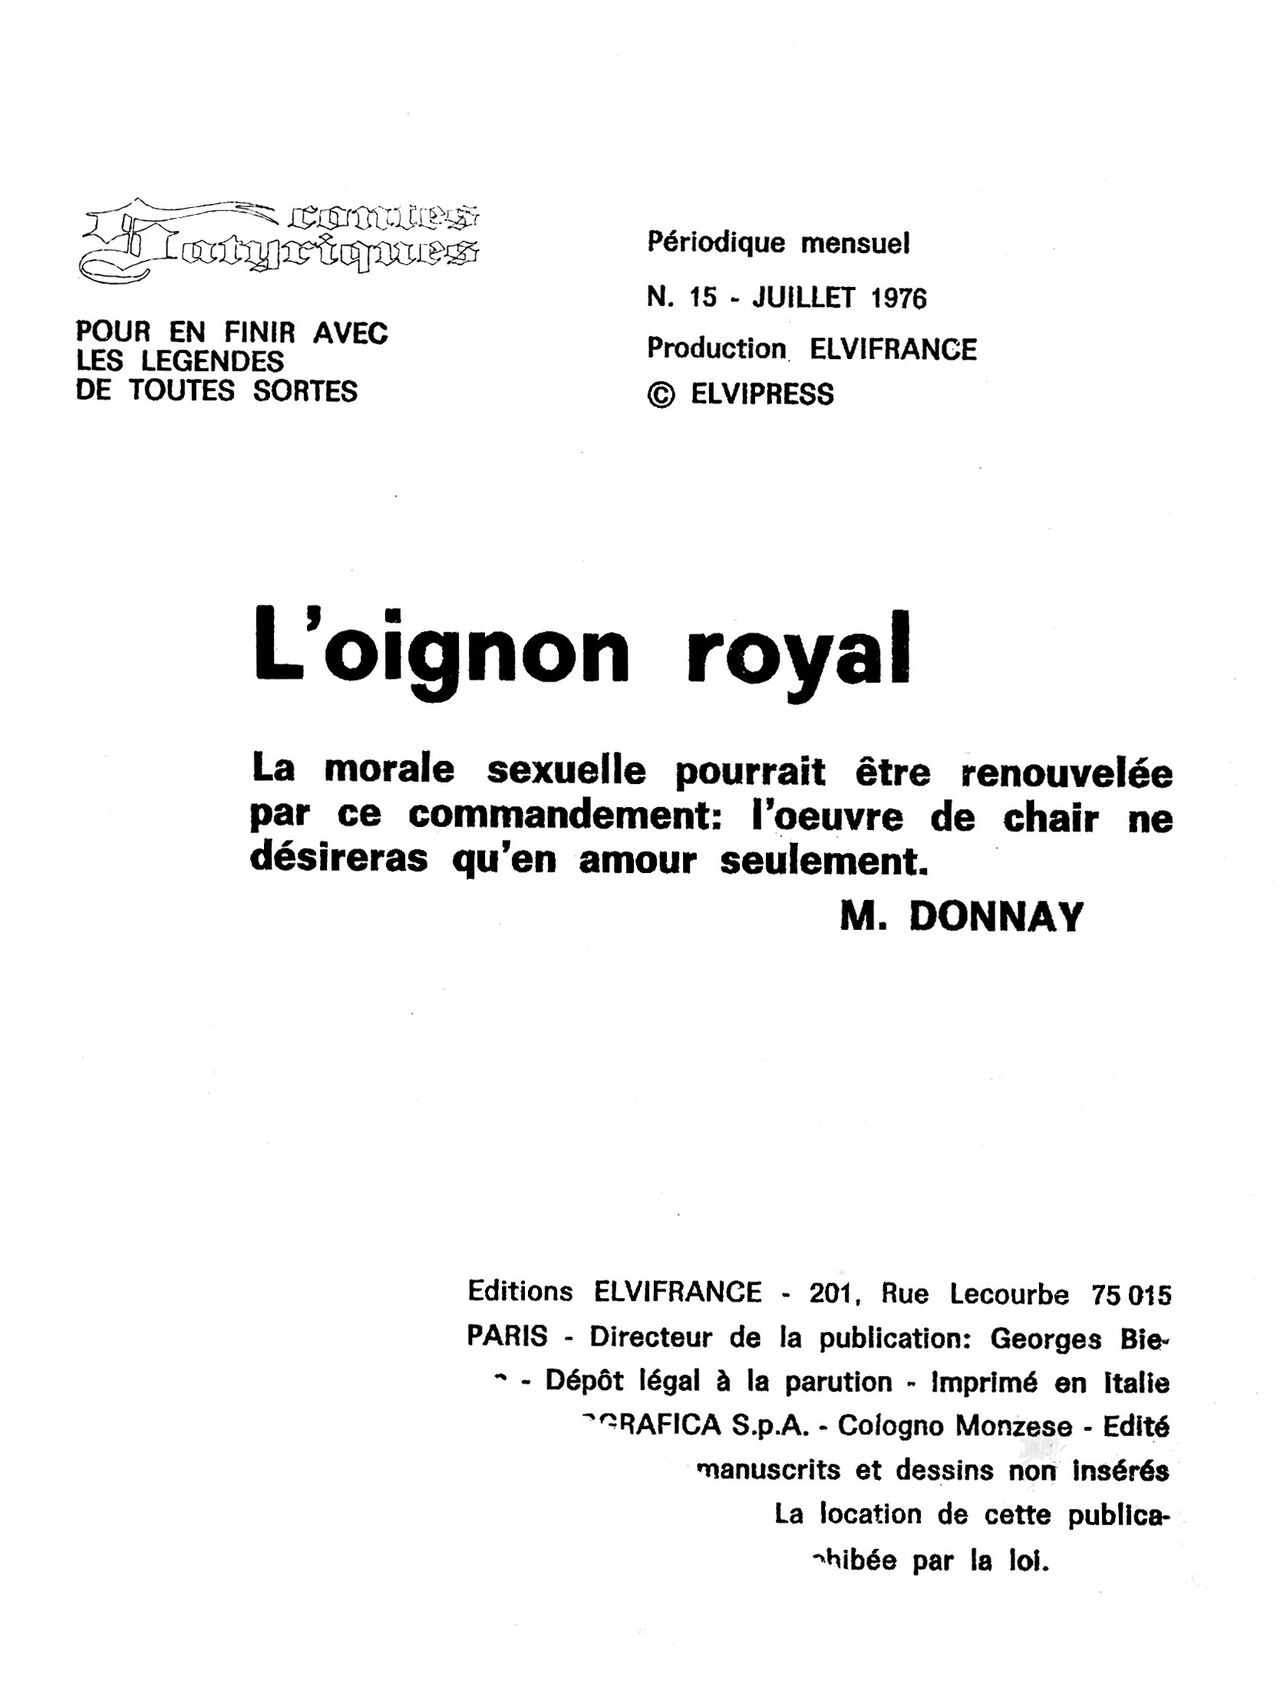 Loignon royal numero d'image 2